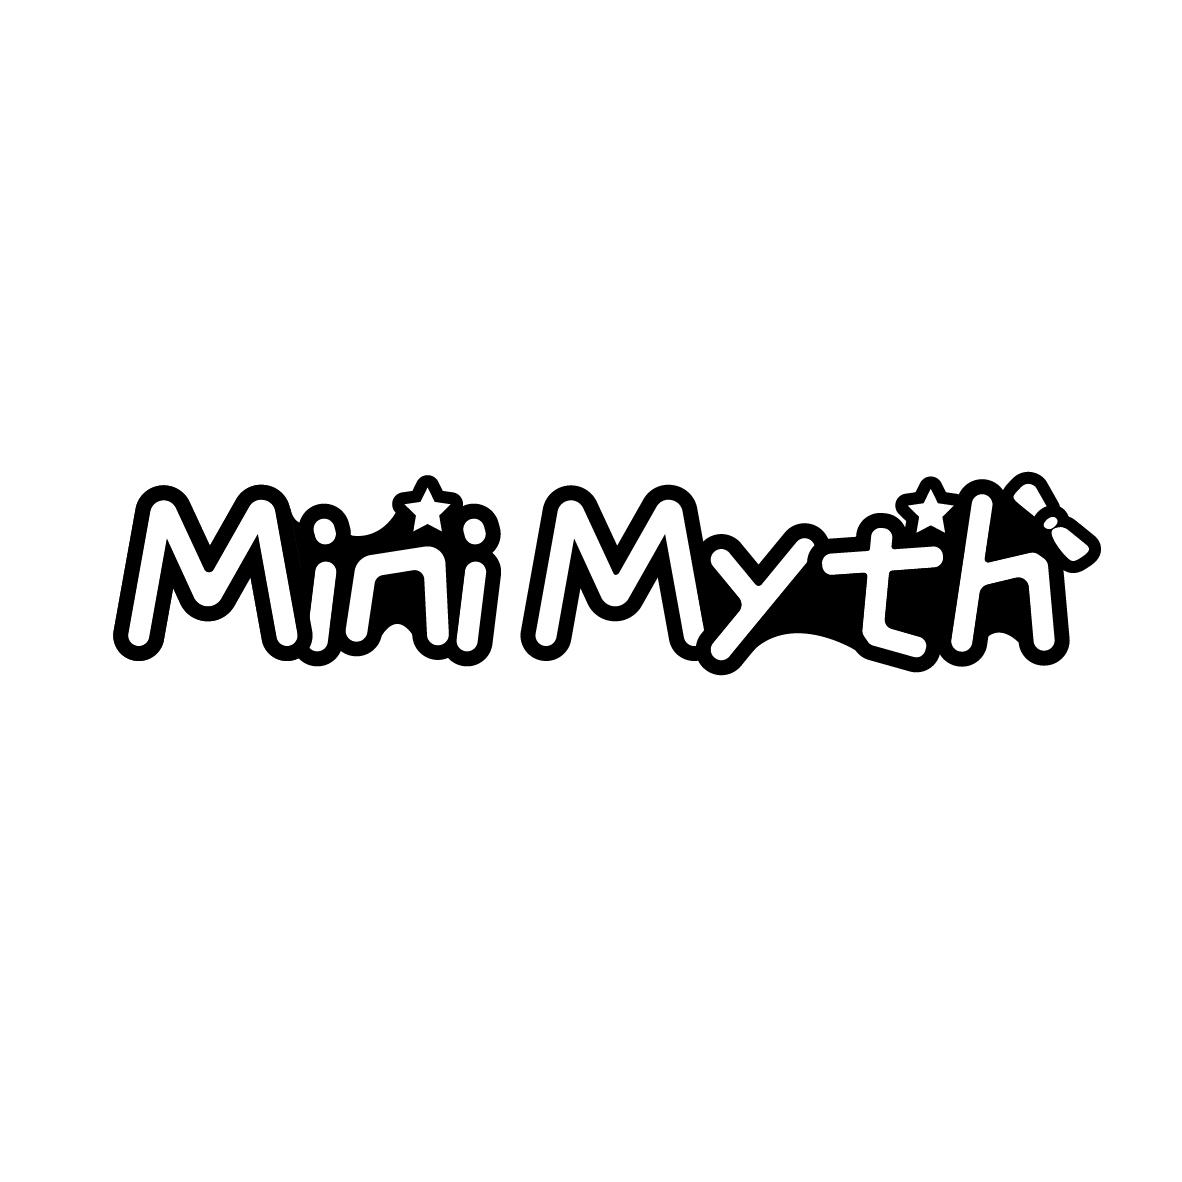 MINI MYTH